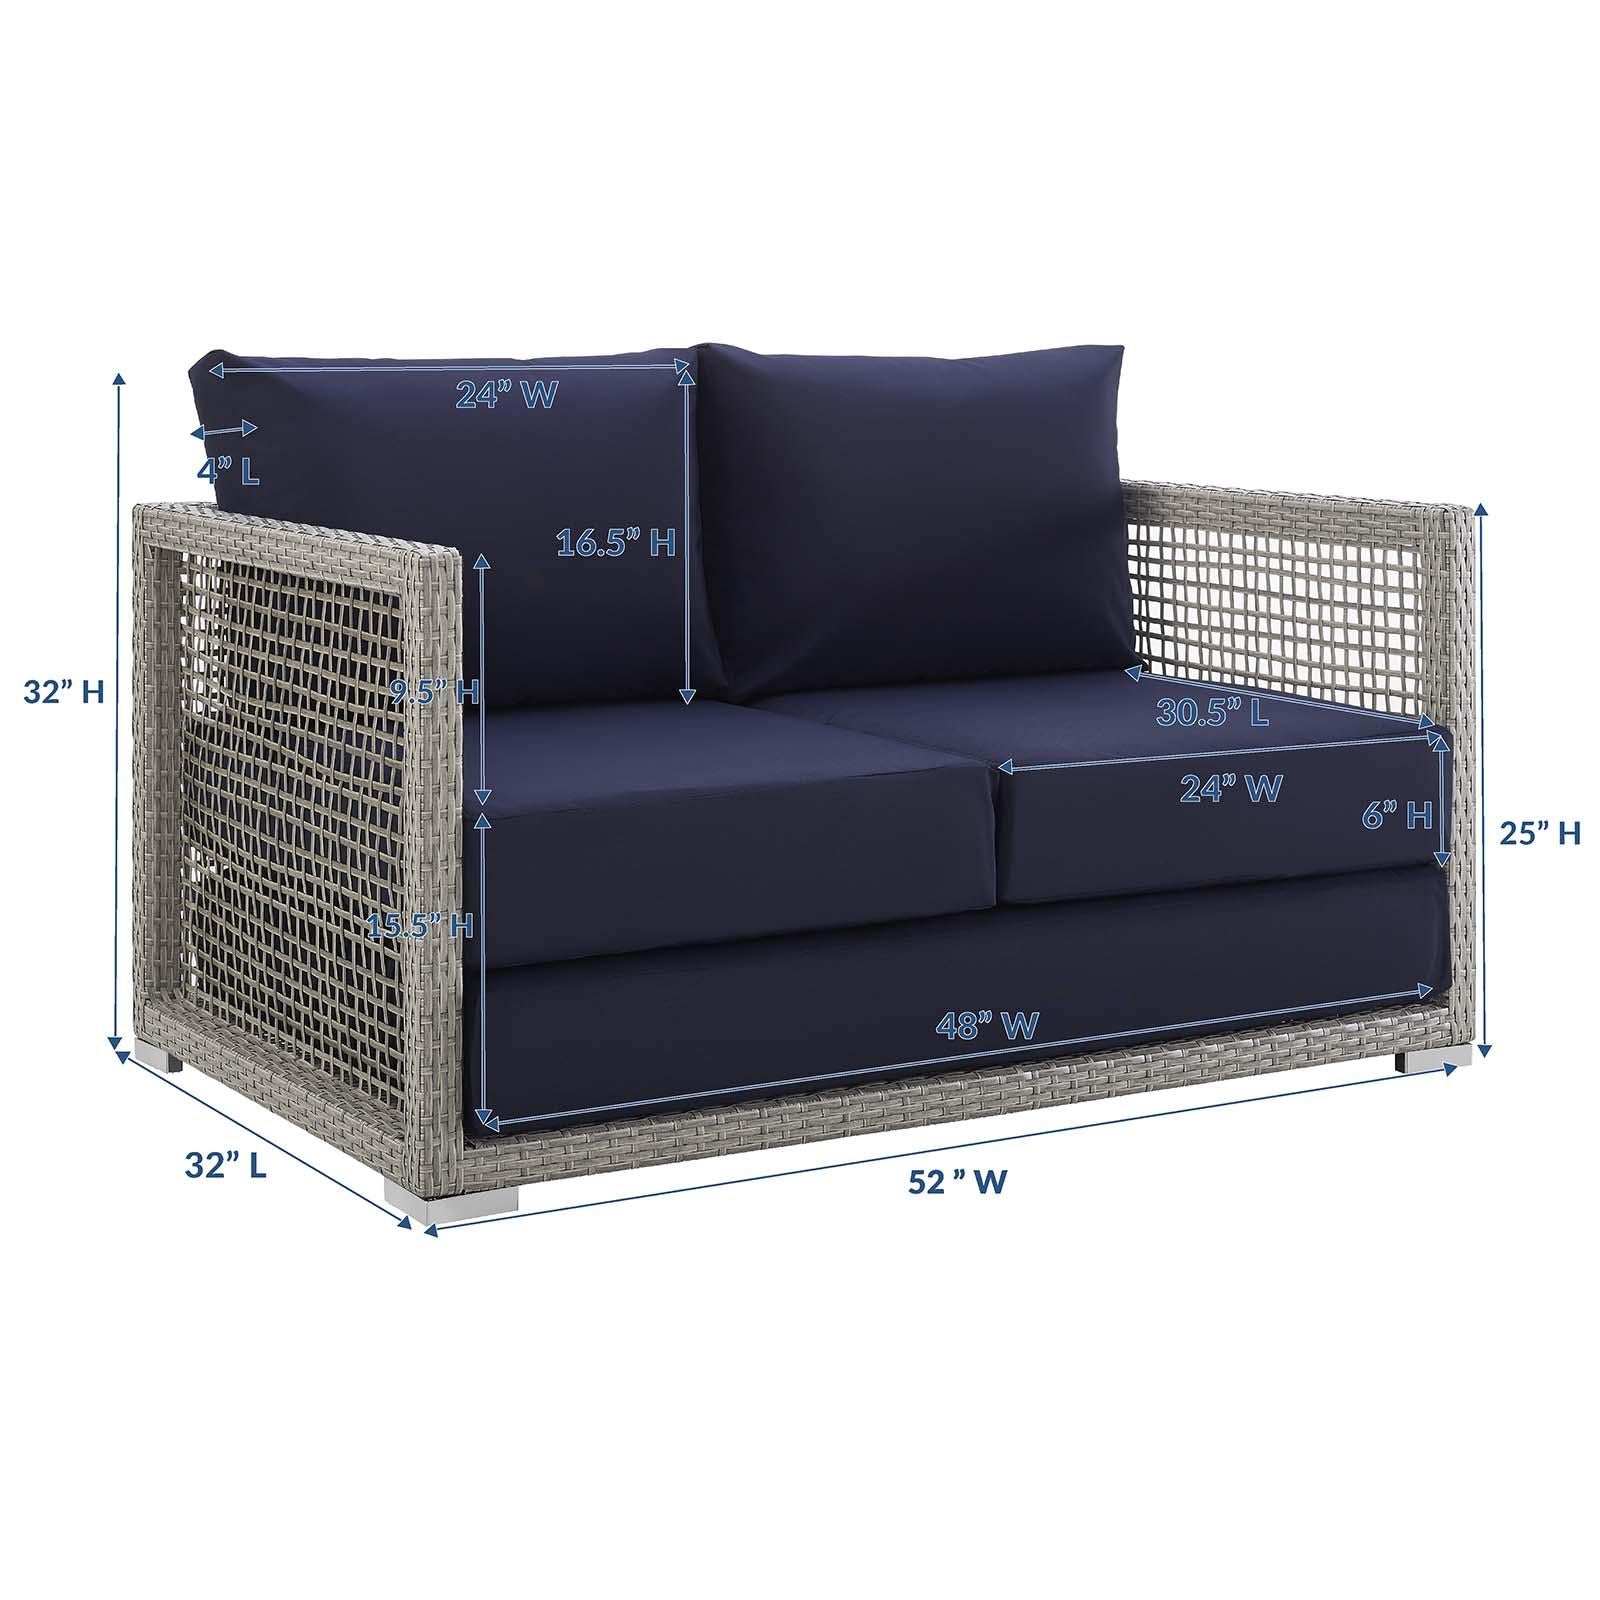 Modway Furniture Modern Aura Outdoor Patio Wicker Rattan Loveseat - EEI-2924